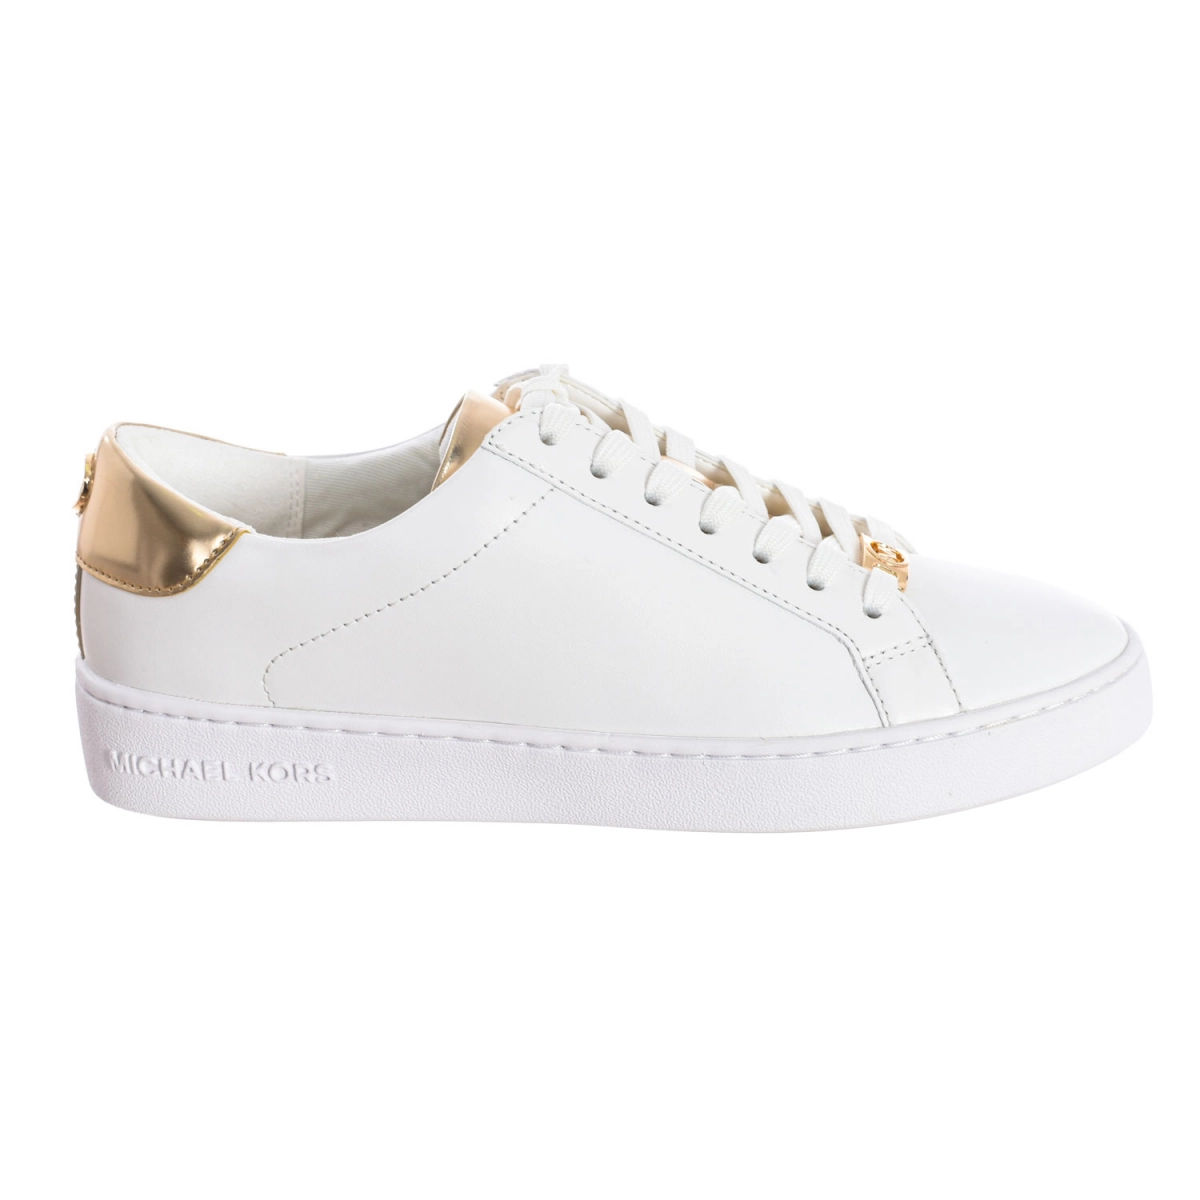 Zapatilla Sneaker Irving clásica Michael Kors S5IRFS2L mujer Talla: 36.5 Color: Blanco S5IRFS2L-OPT-PLGOLD.36.5